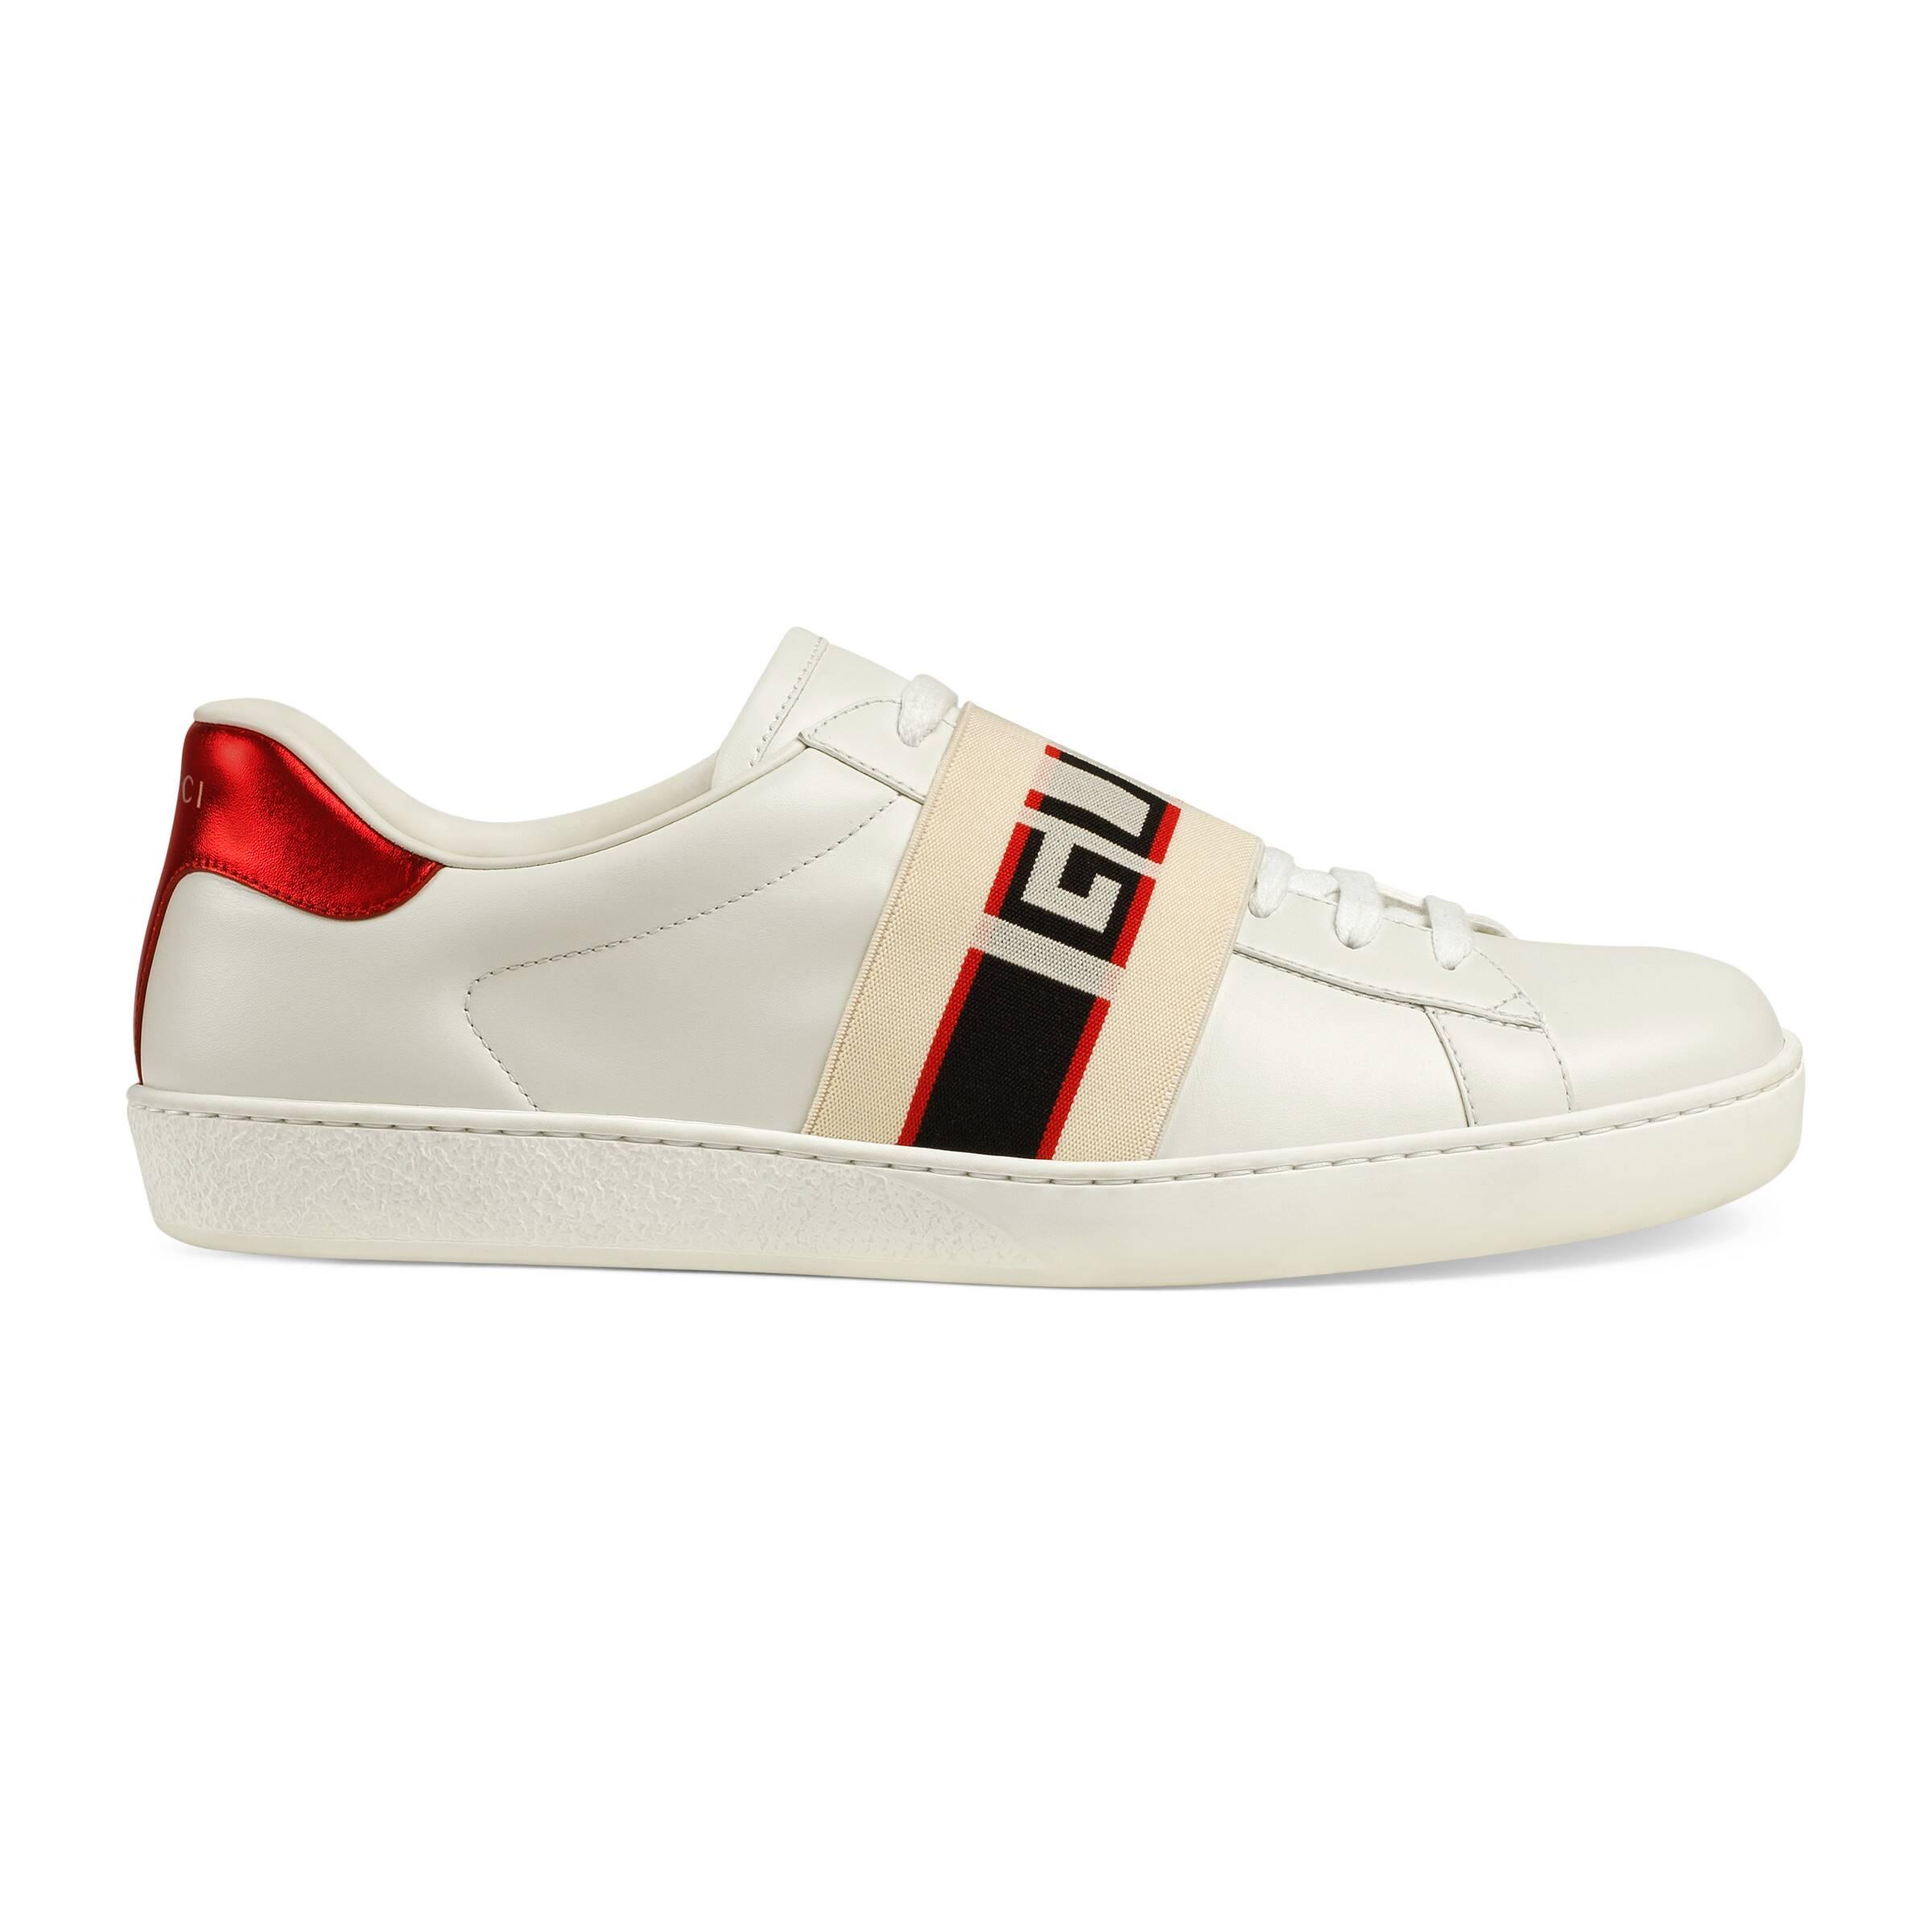 Gucci Ace Stripe Sneaker in White for Men - Lyst